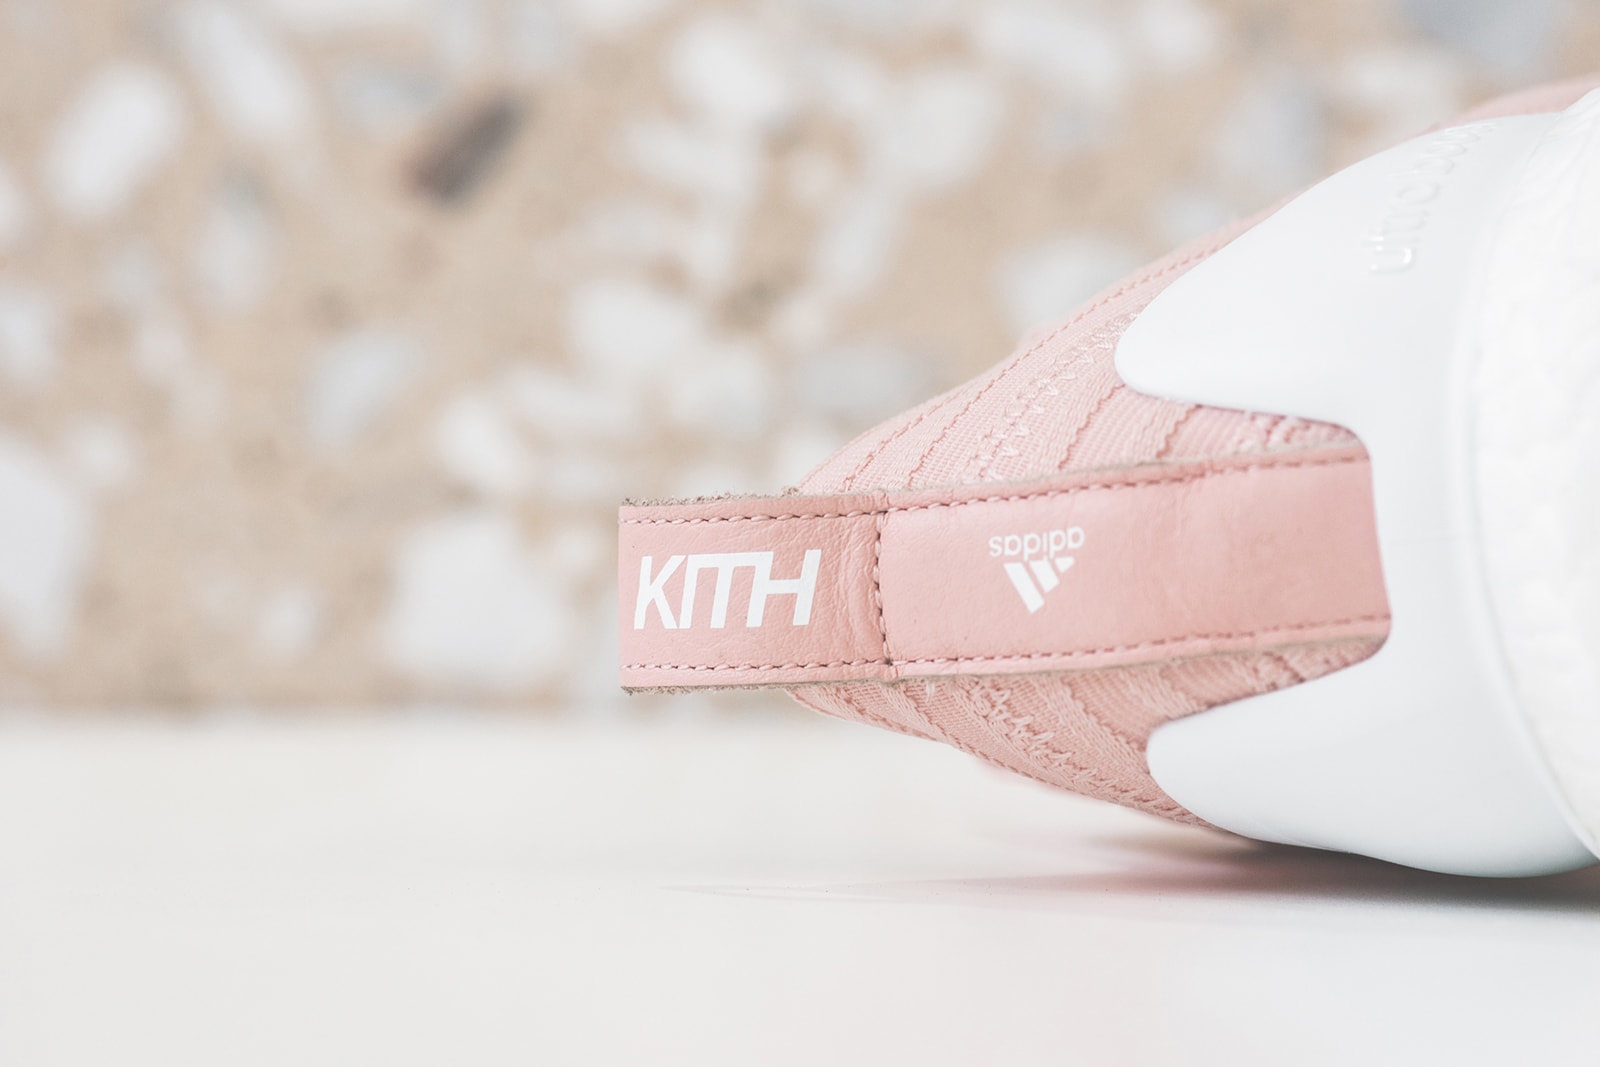 KITH Flamingos adidas Soccer Season 2 Footwear Nemziz Tango Pink 2017 November 3 Release Date Info Sneakers Shoes Footwear